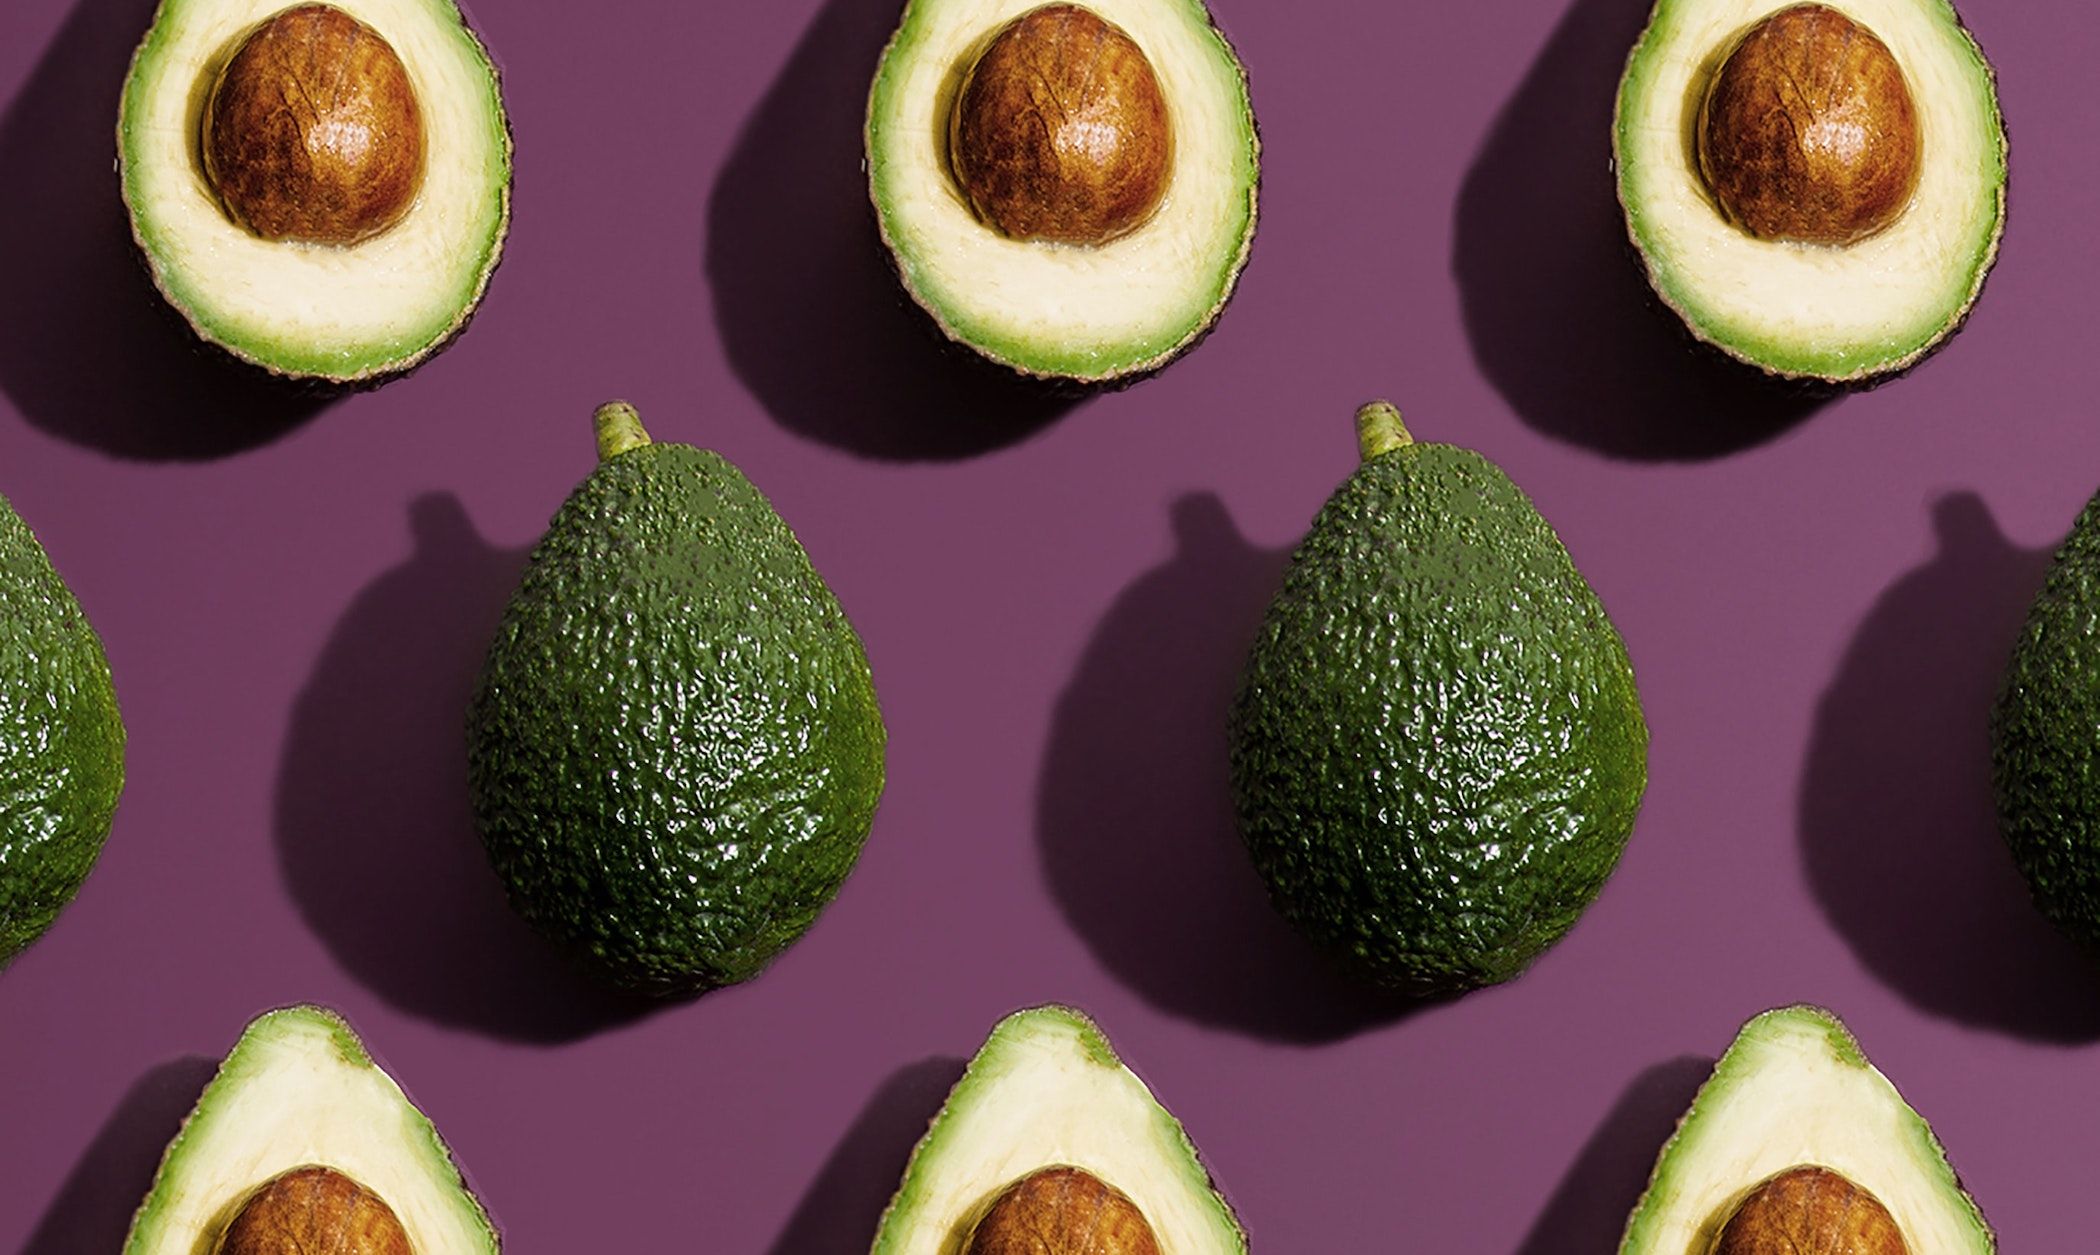 how to choose an avocado